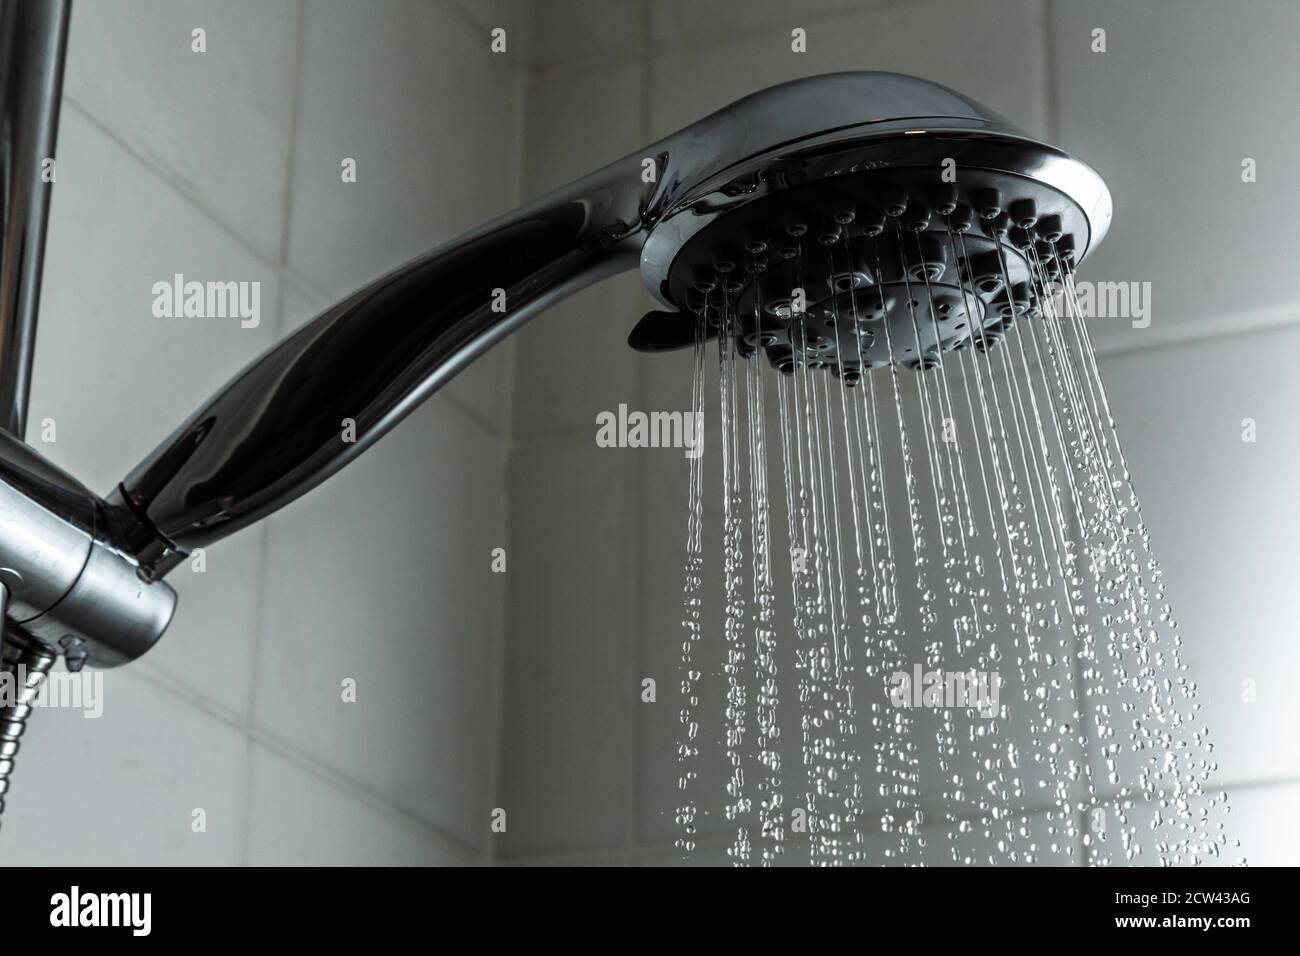 shower head water spray Stock Photo